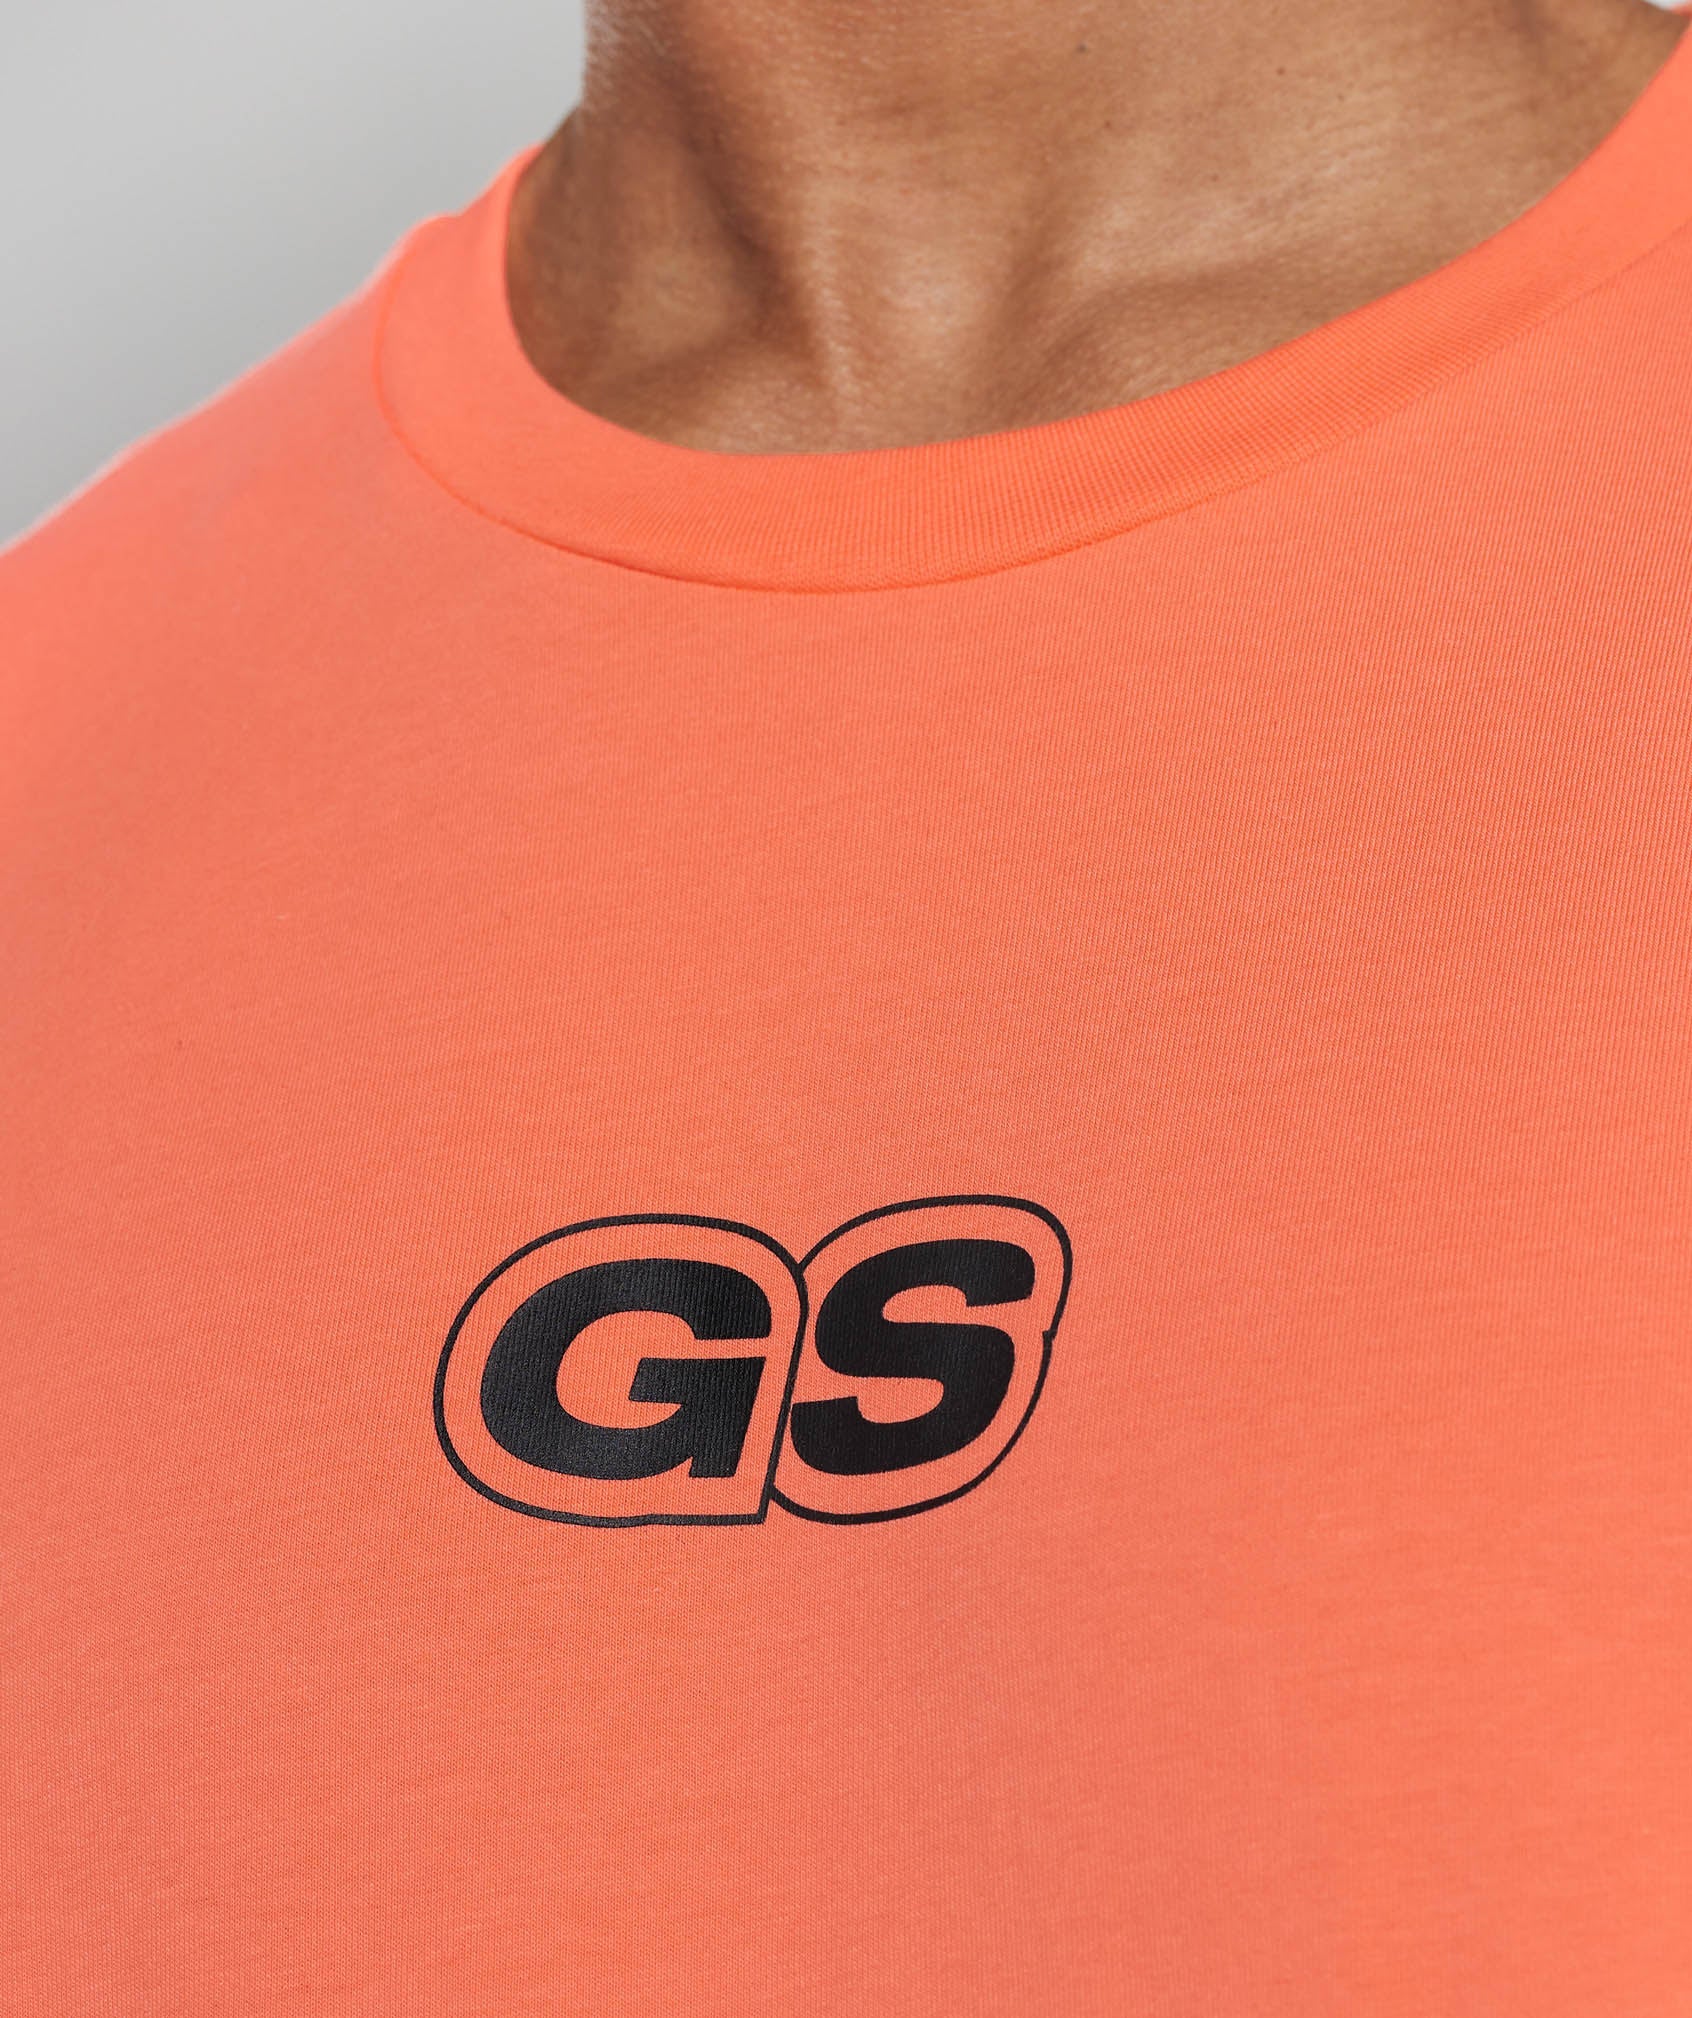 GMSHK Oversized T-Shirt in Solstice Orange